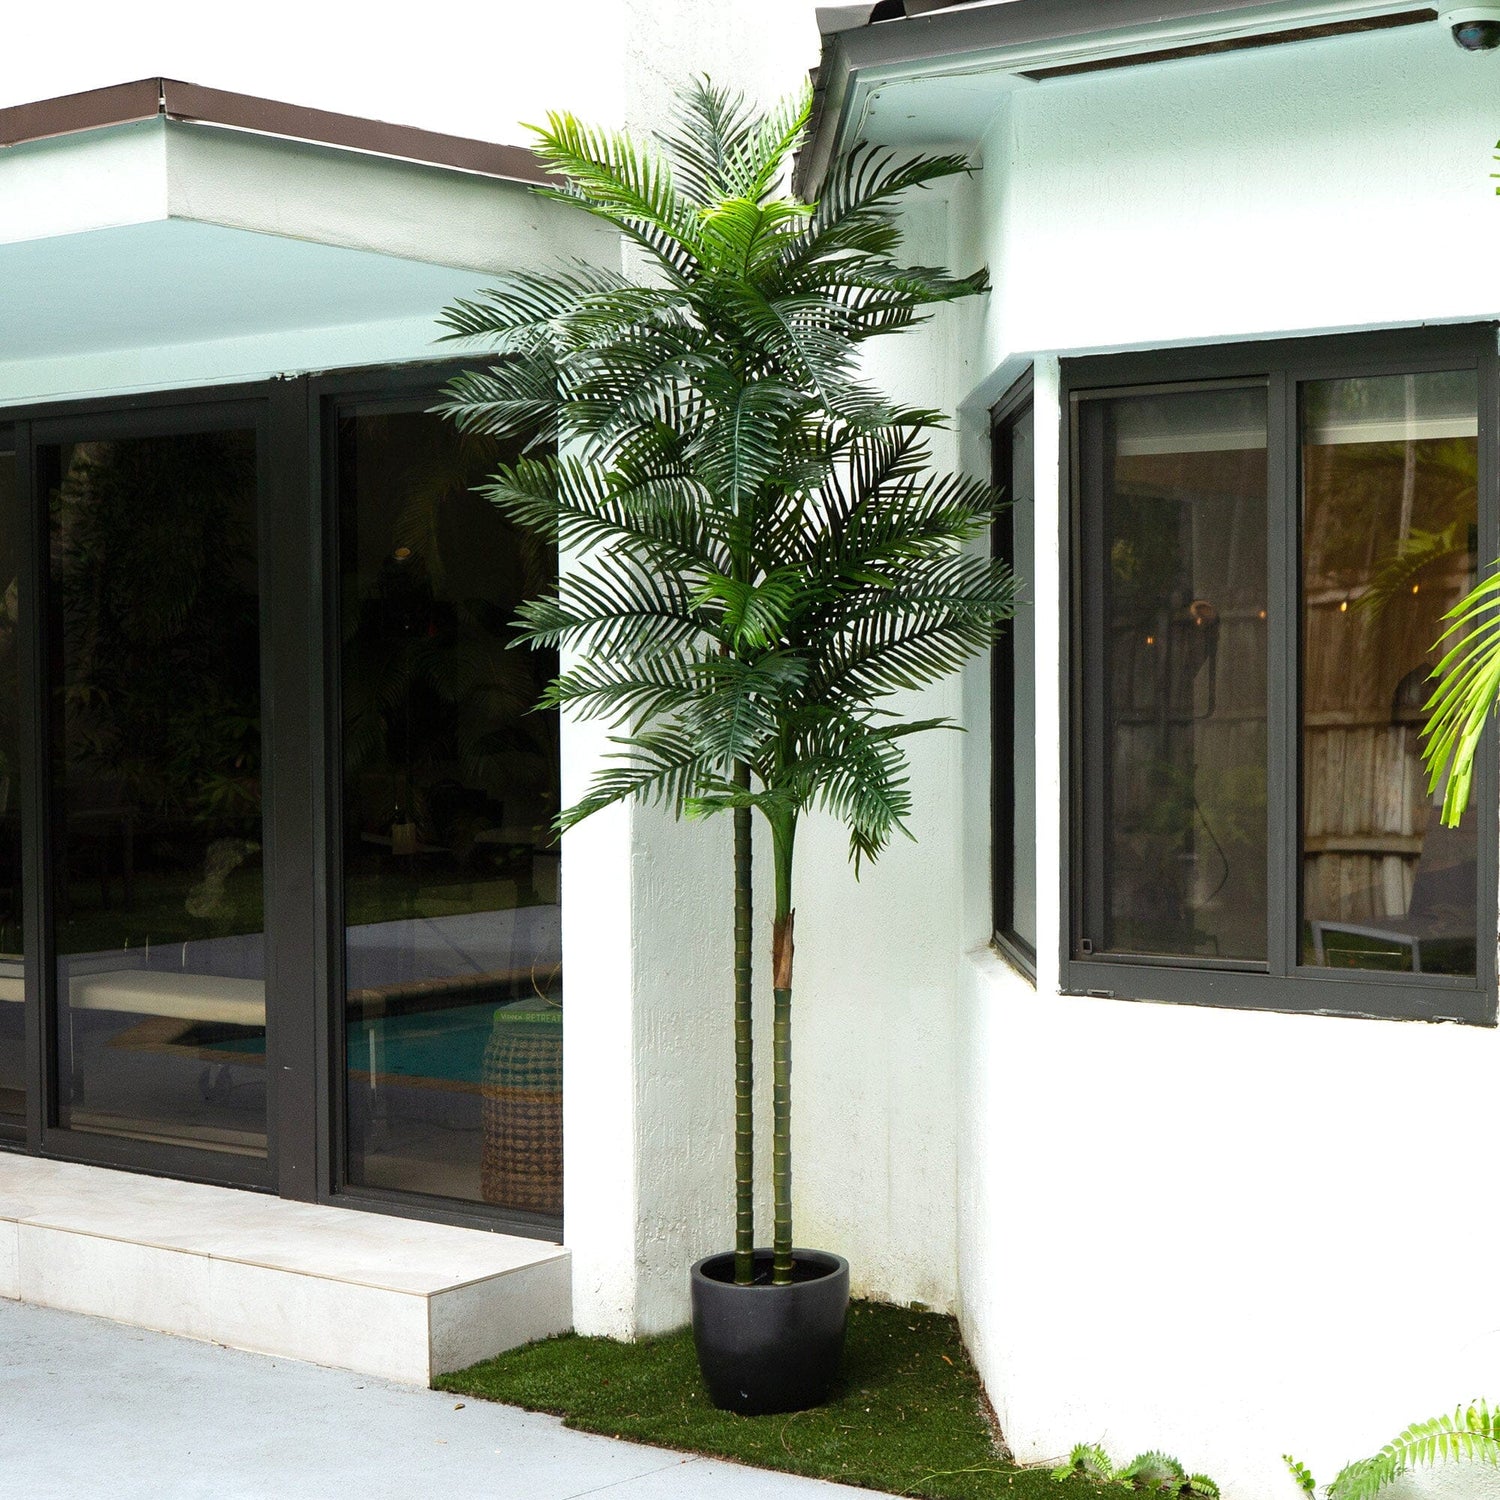 10’ UV Resistant Artificial Double Robellini Palm Tree (Indoor/Outdoor)